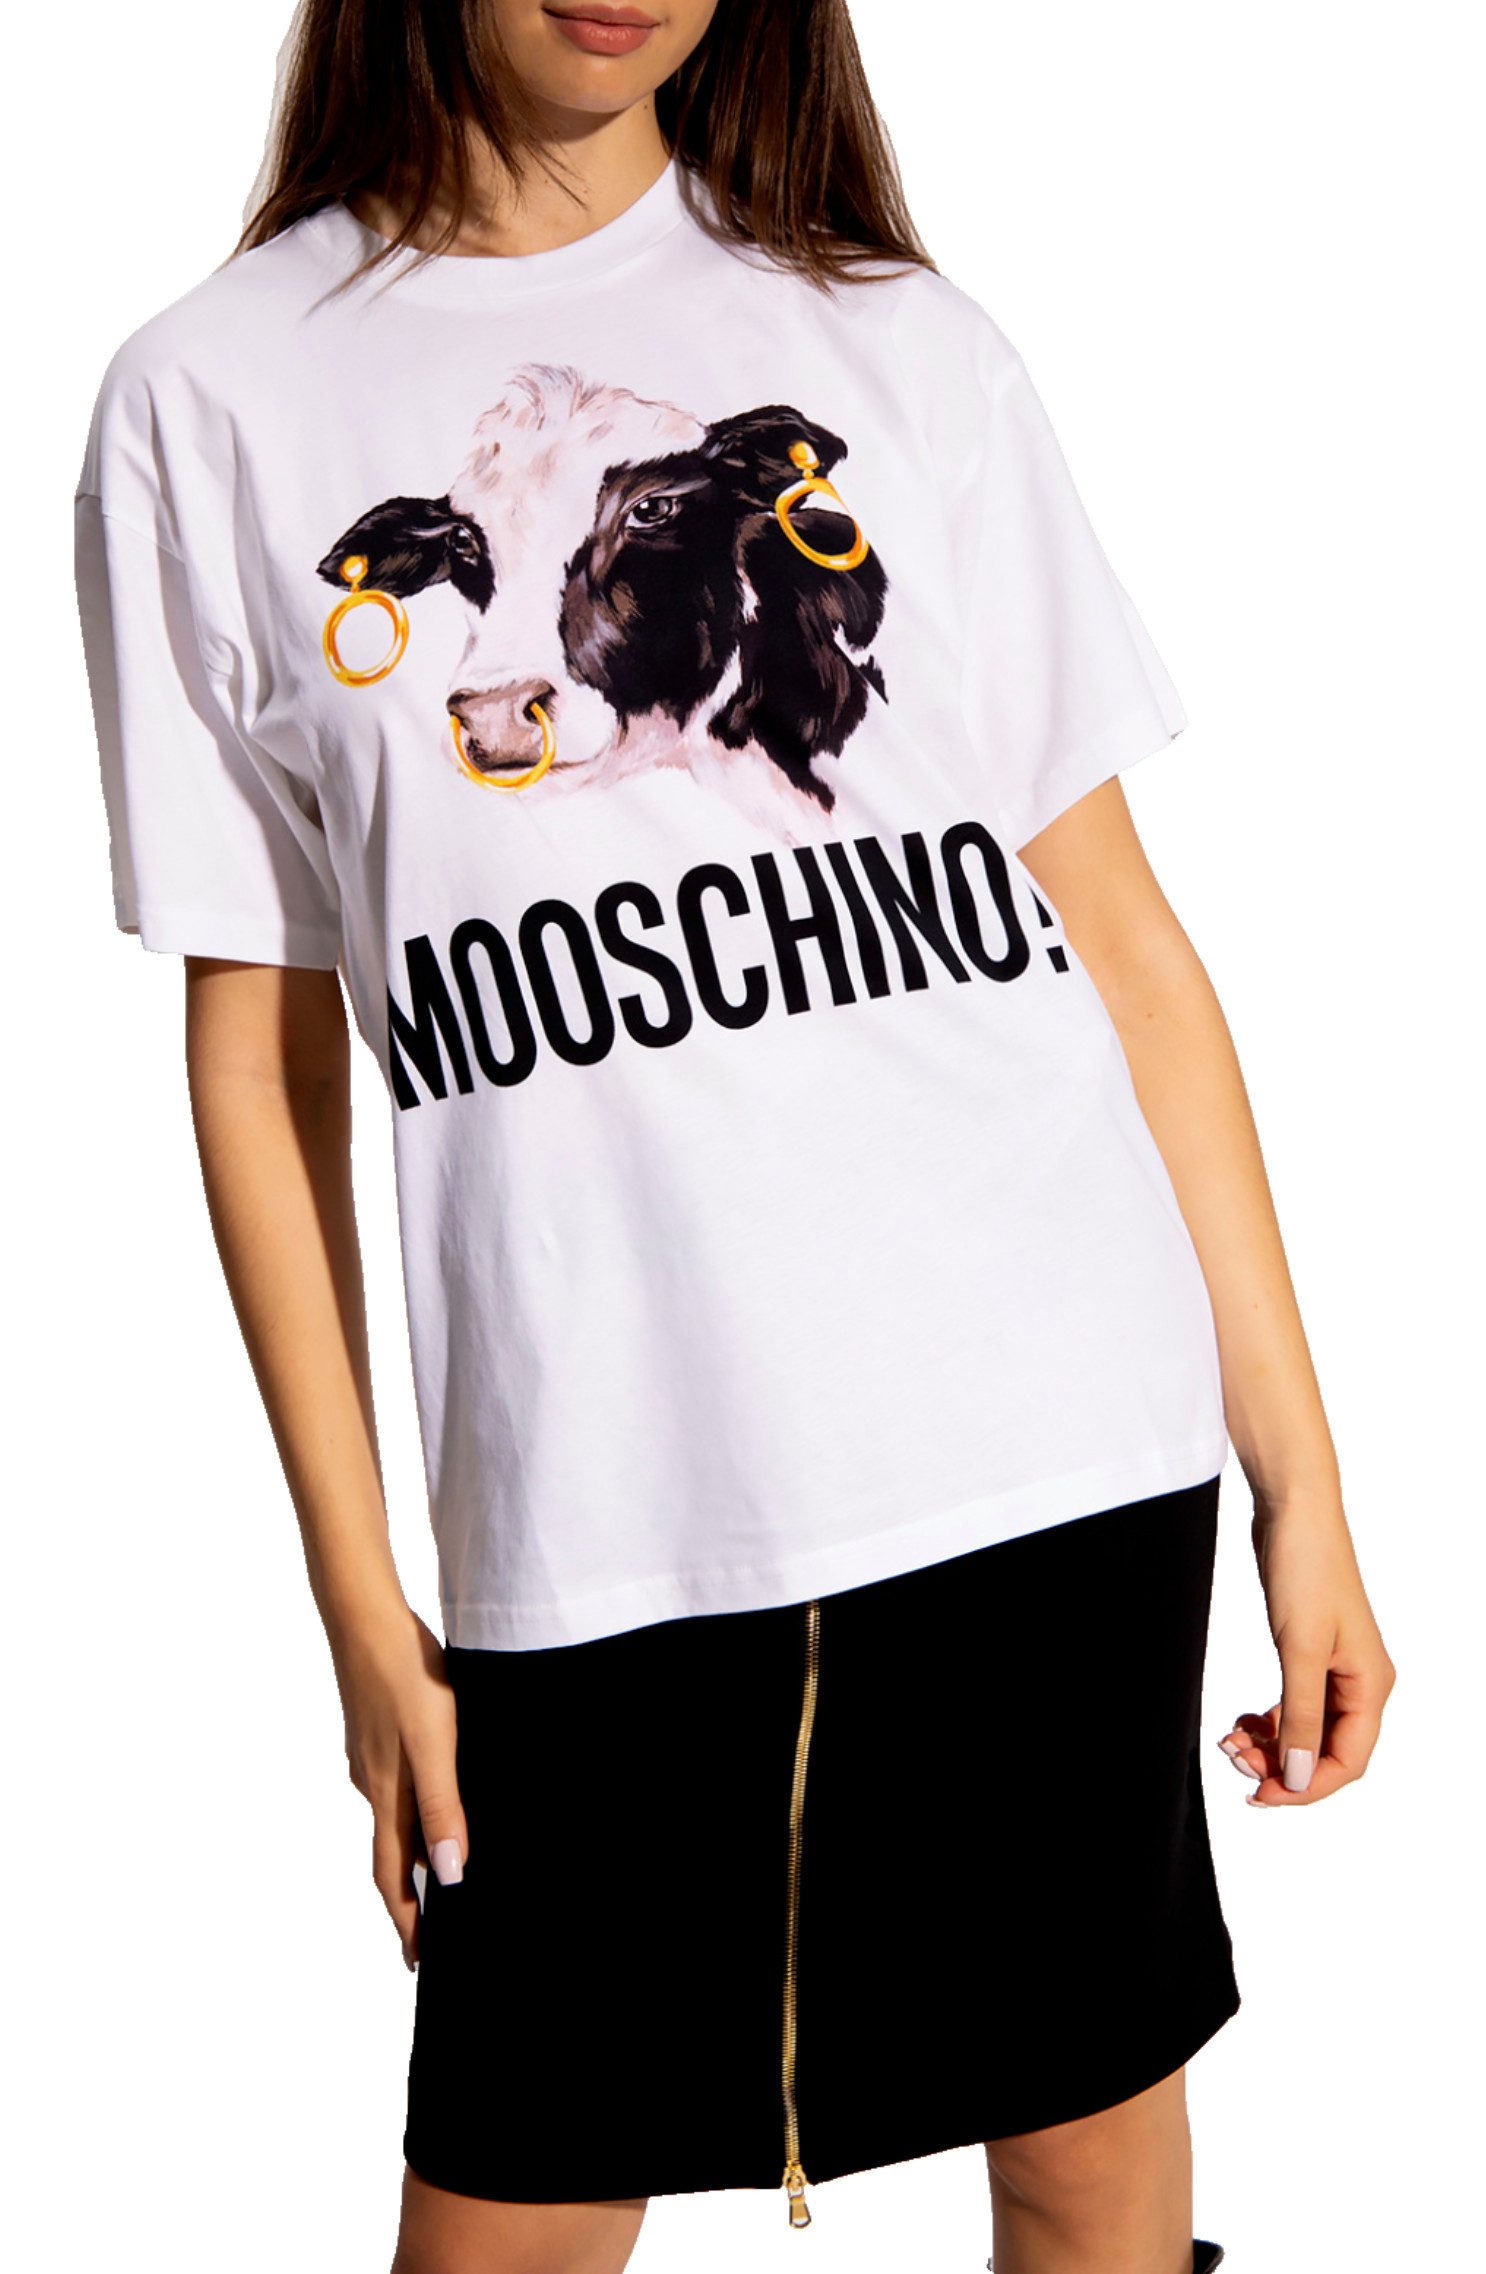 Moschino T-Shirt COUTURE " Mooschino Kuh Cow " Shirt Oversized Loose Boxy Tee New